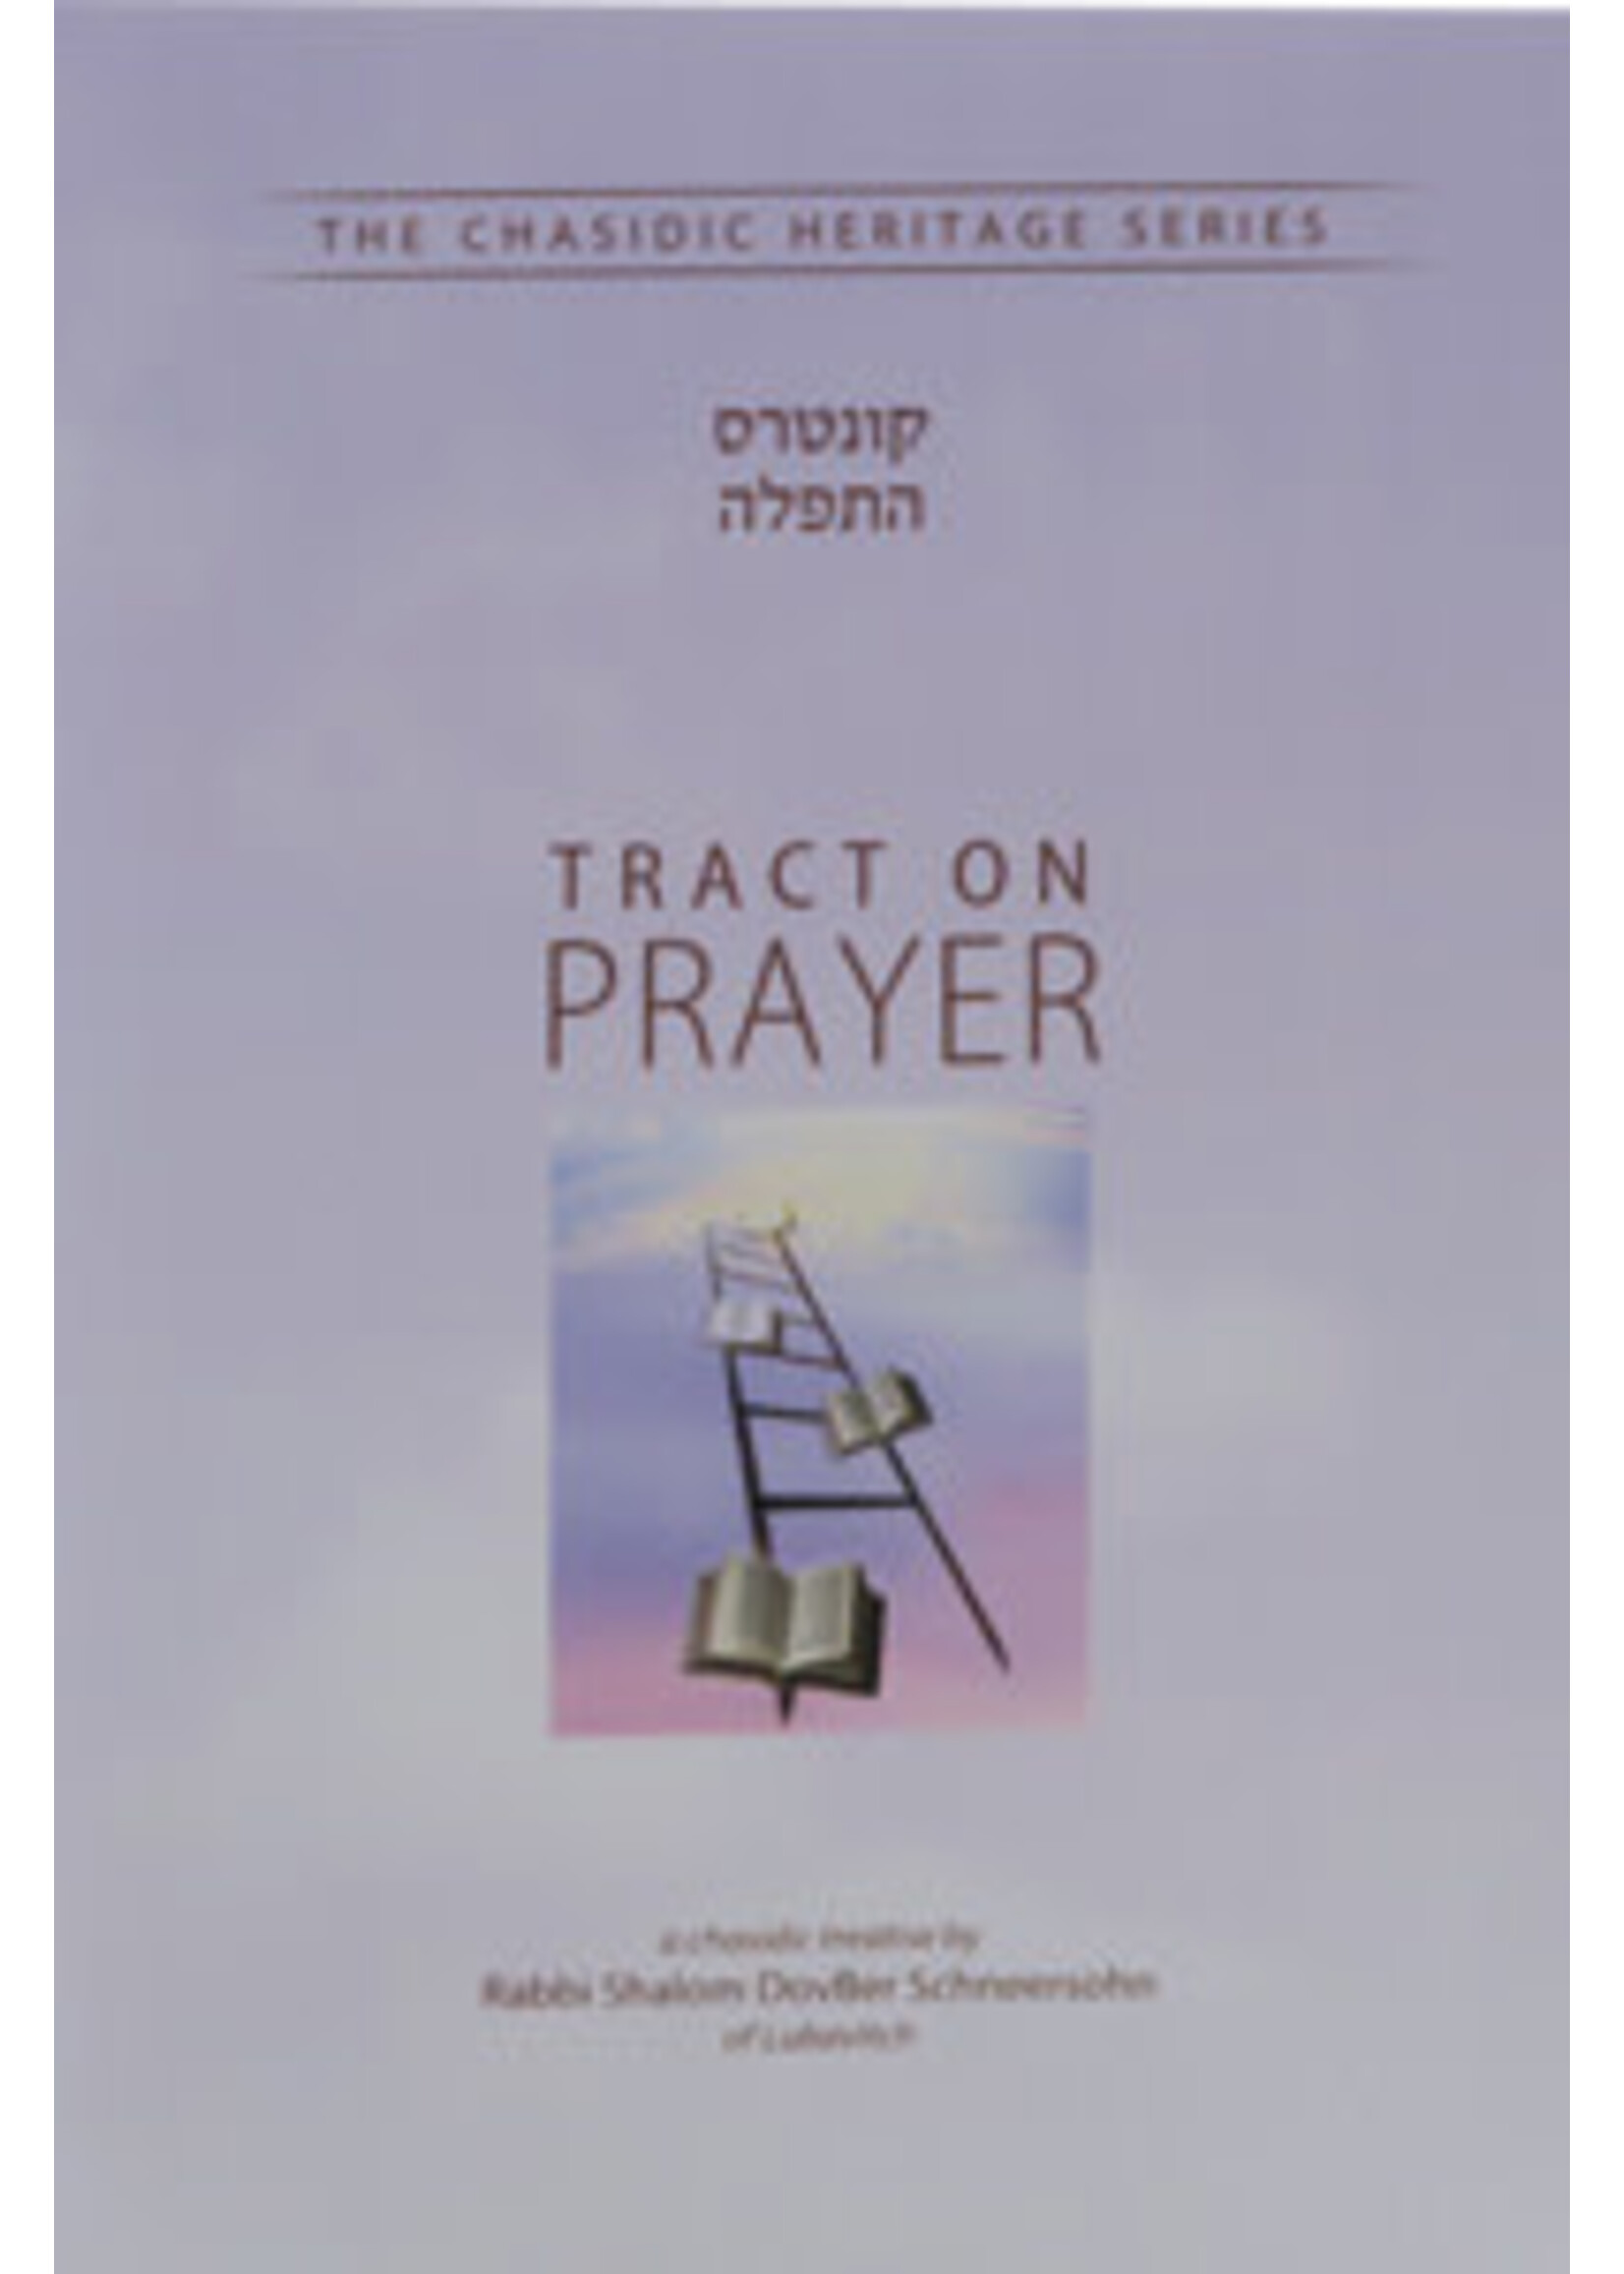 TRACT ON PRAYER - KUNTRES HATFILAH - CHS